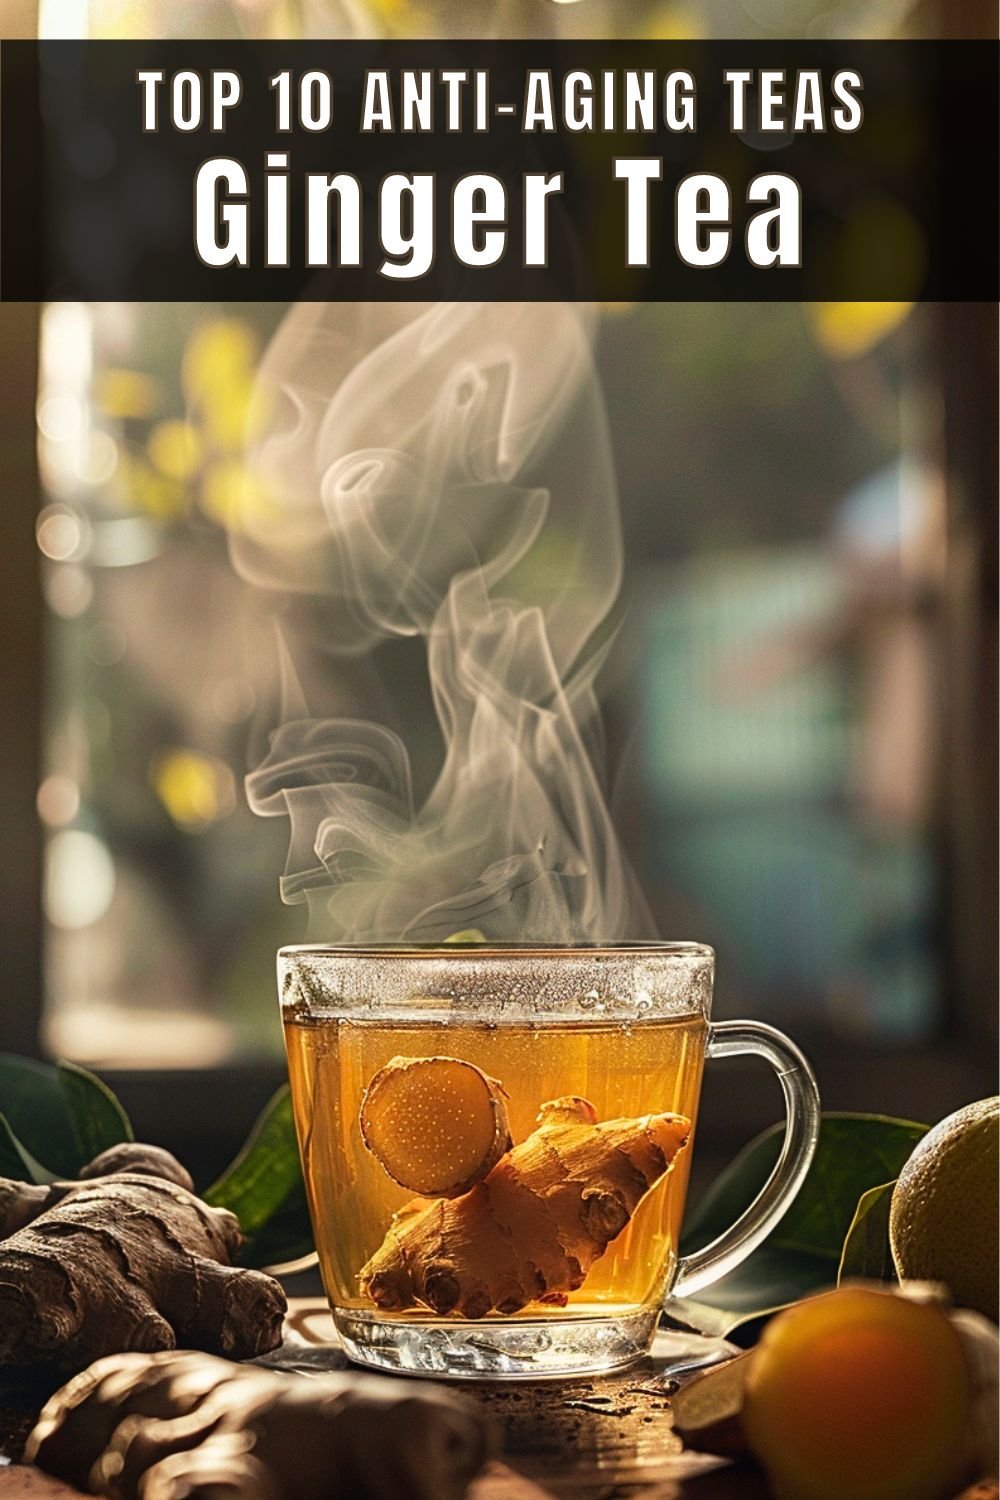 Top 10 Anti-Aging Teas Ginger Tea